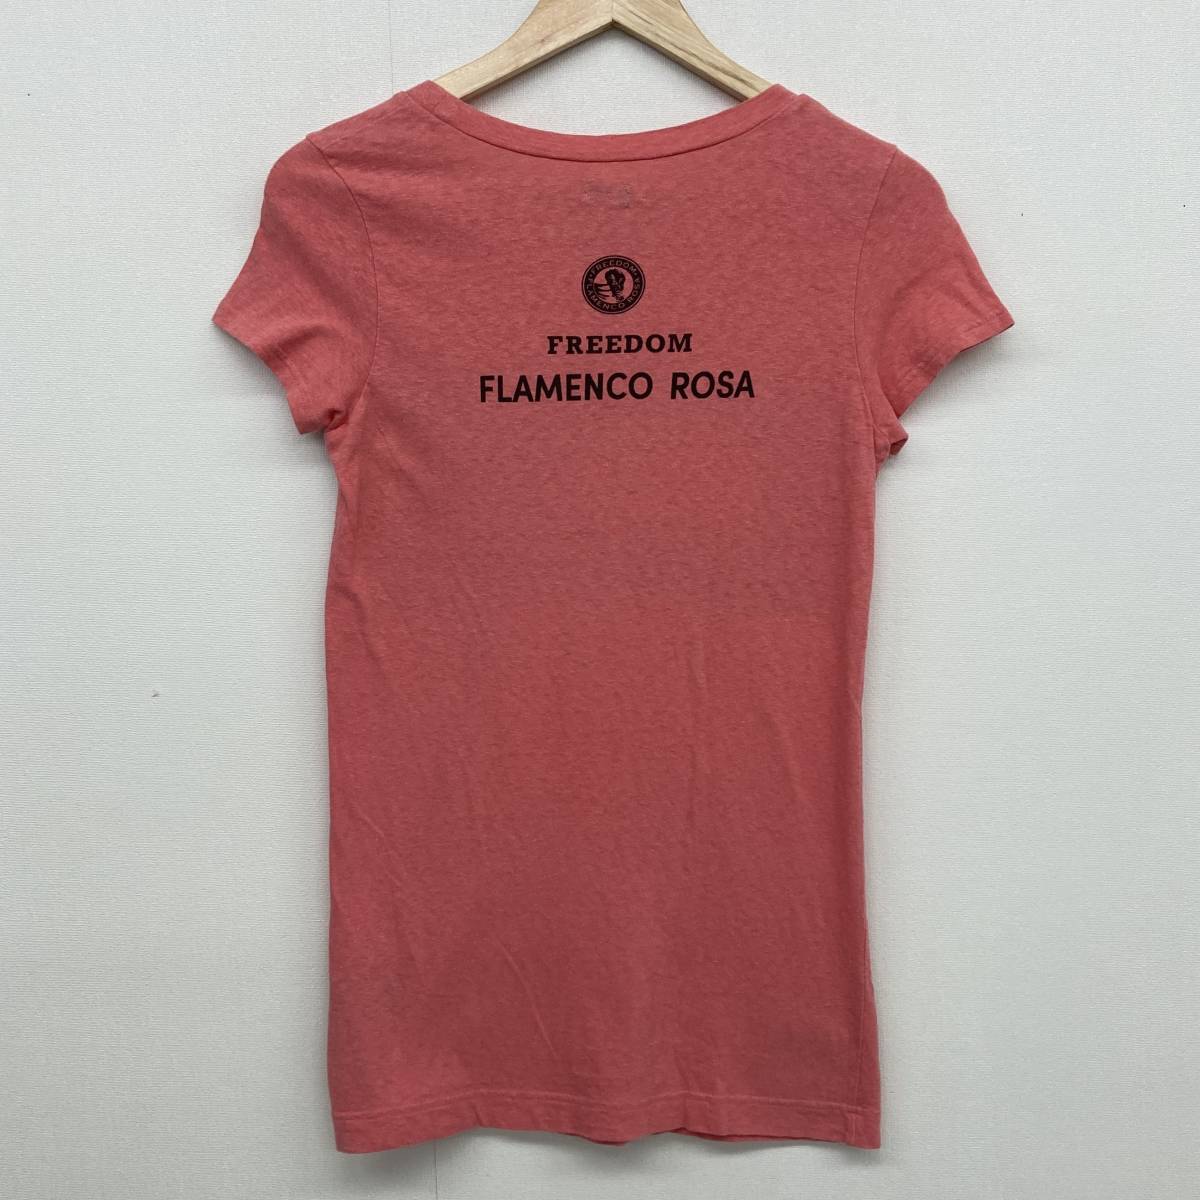 L.G.B. FREEDOM FLAMENCO ROSA flamingo photo short sleeves T-shirt salmon pink 0 size Le Grand Bleu LGB cut and sewn archive 3070145